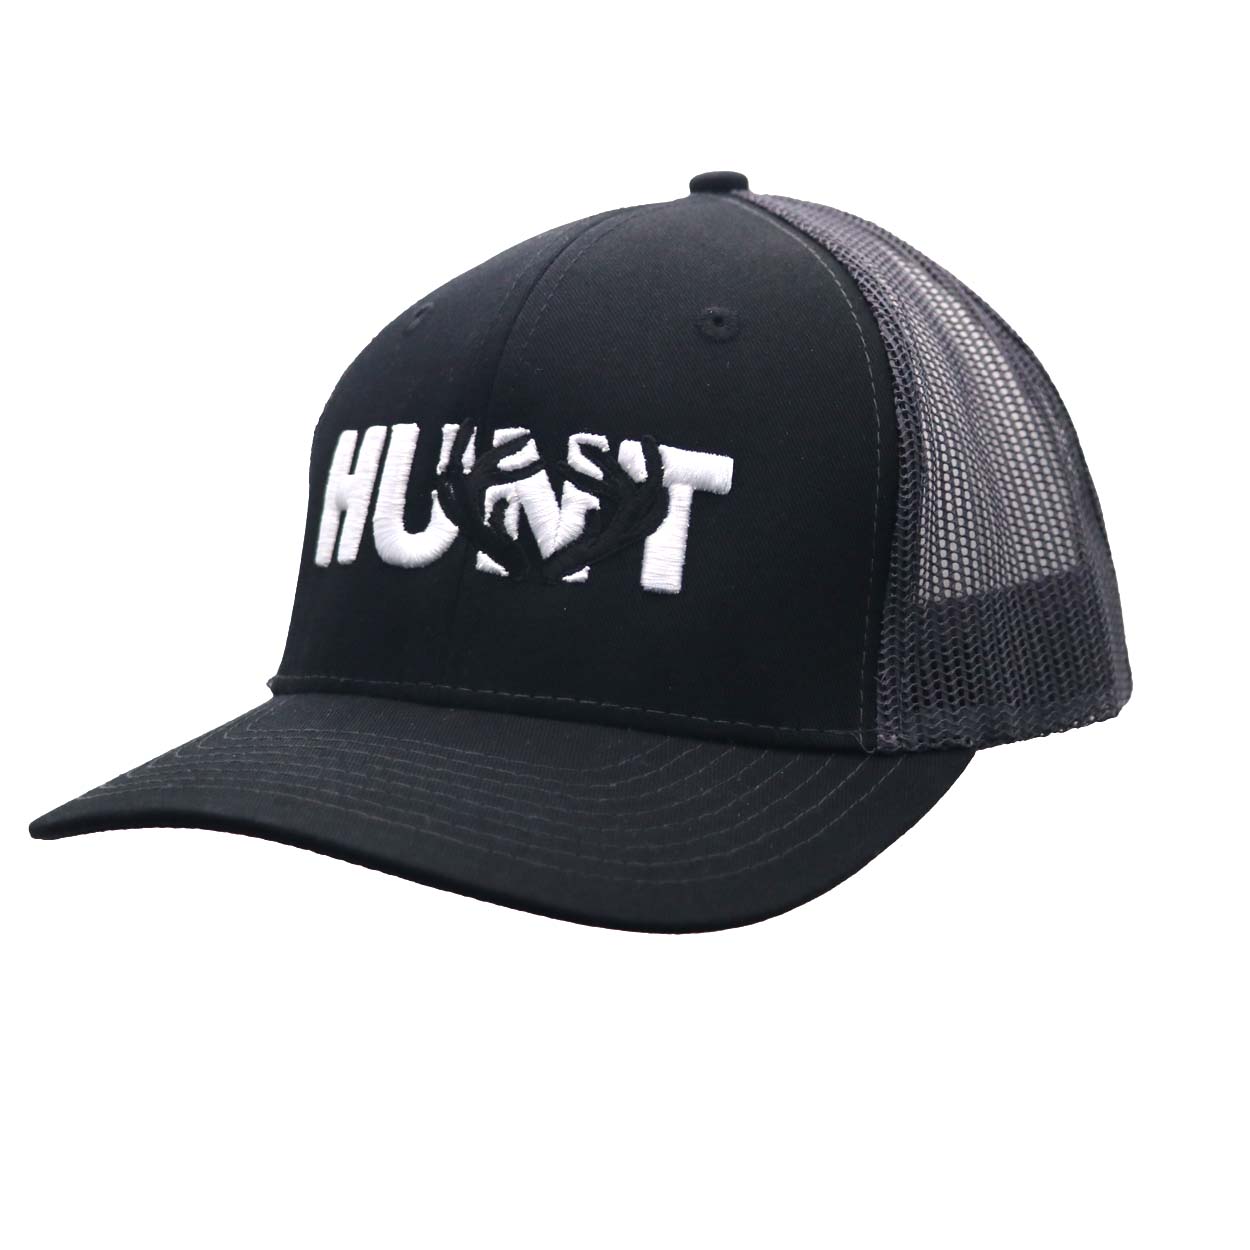 Hunt Rack Logo Classic Embroidered Snapback Trucker Hat Black/Gray